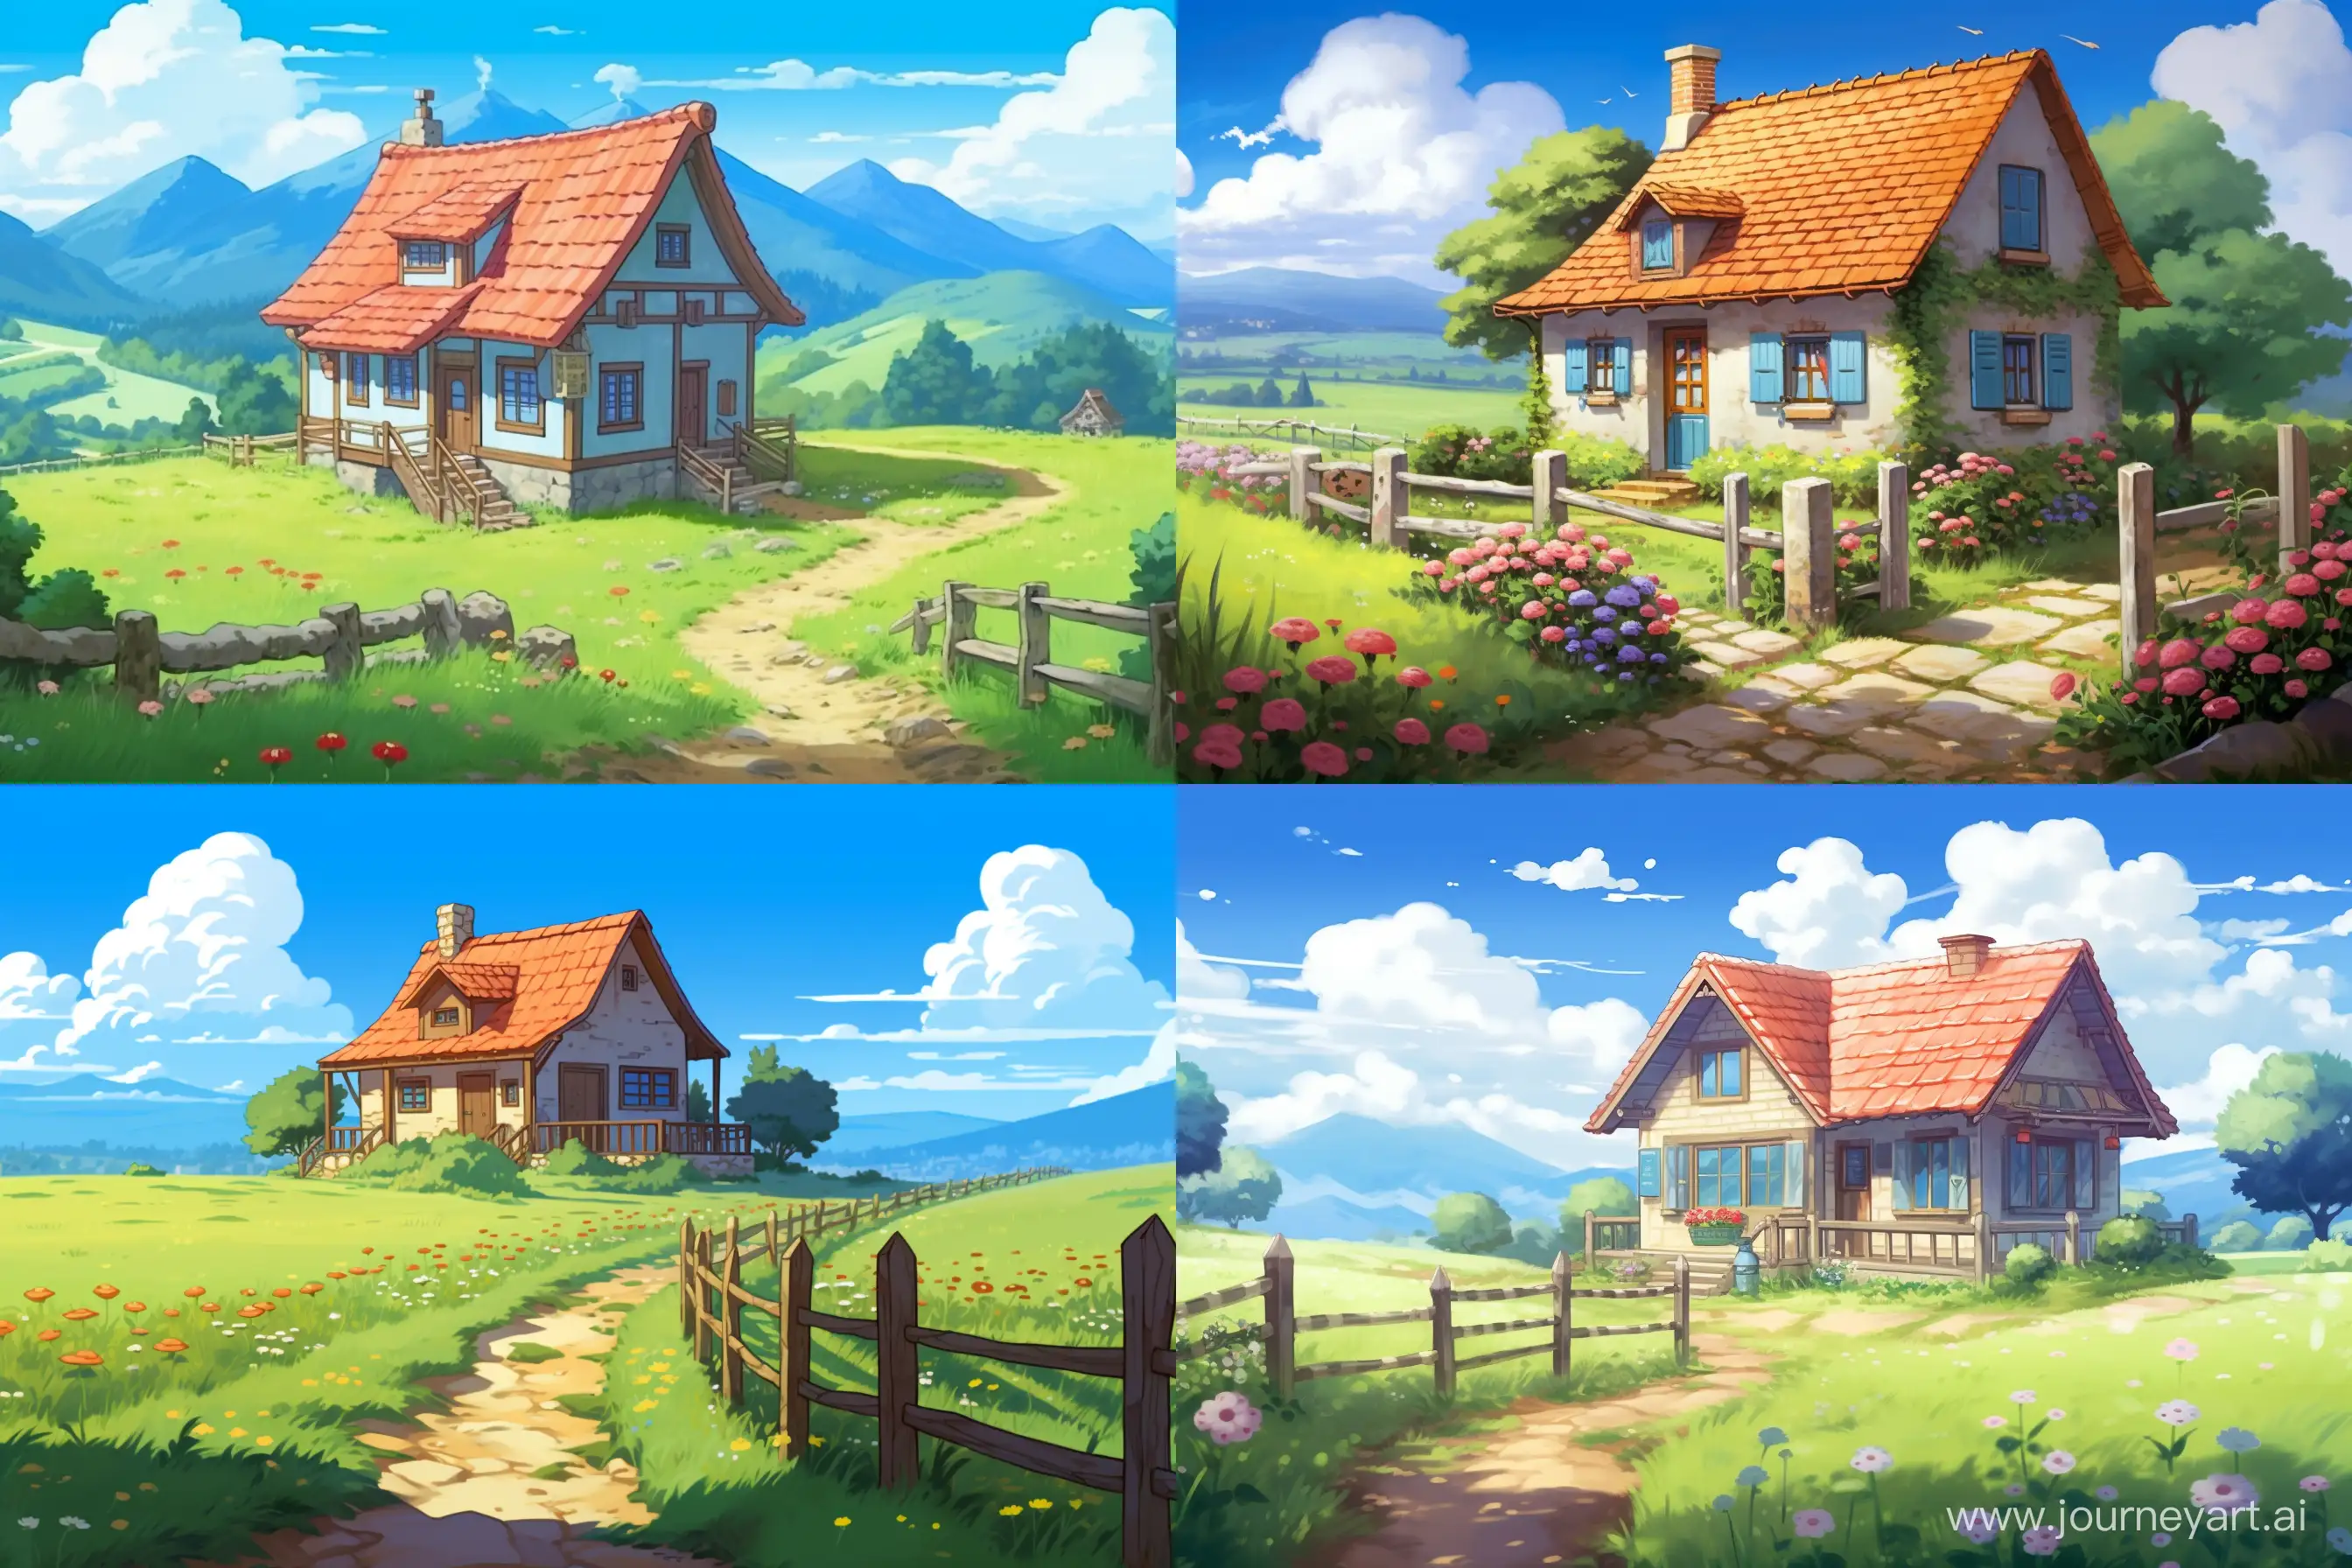 Enchanting-Rustic-Ghibliinspired-House-in-Lush-Countryside